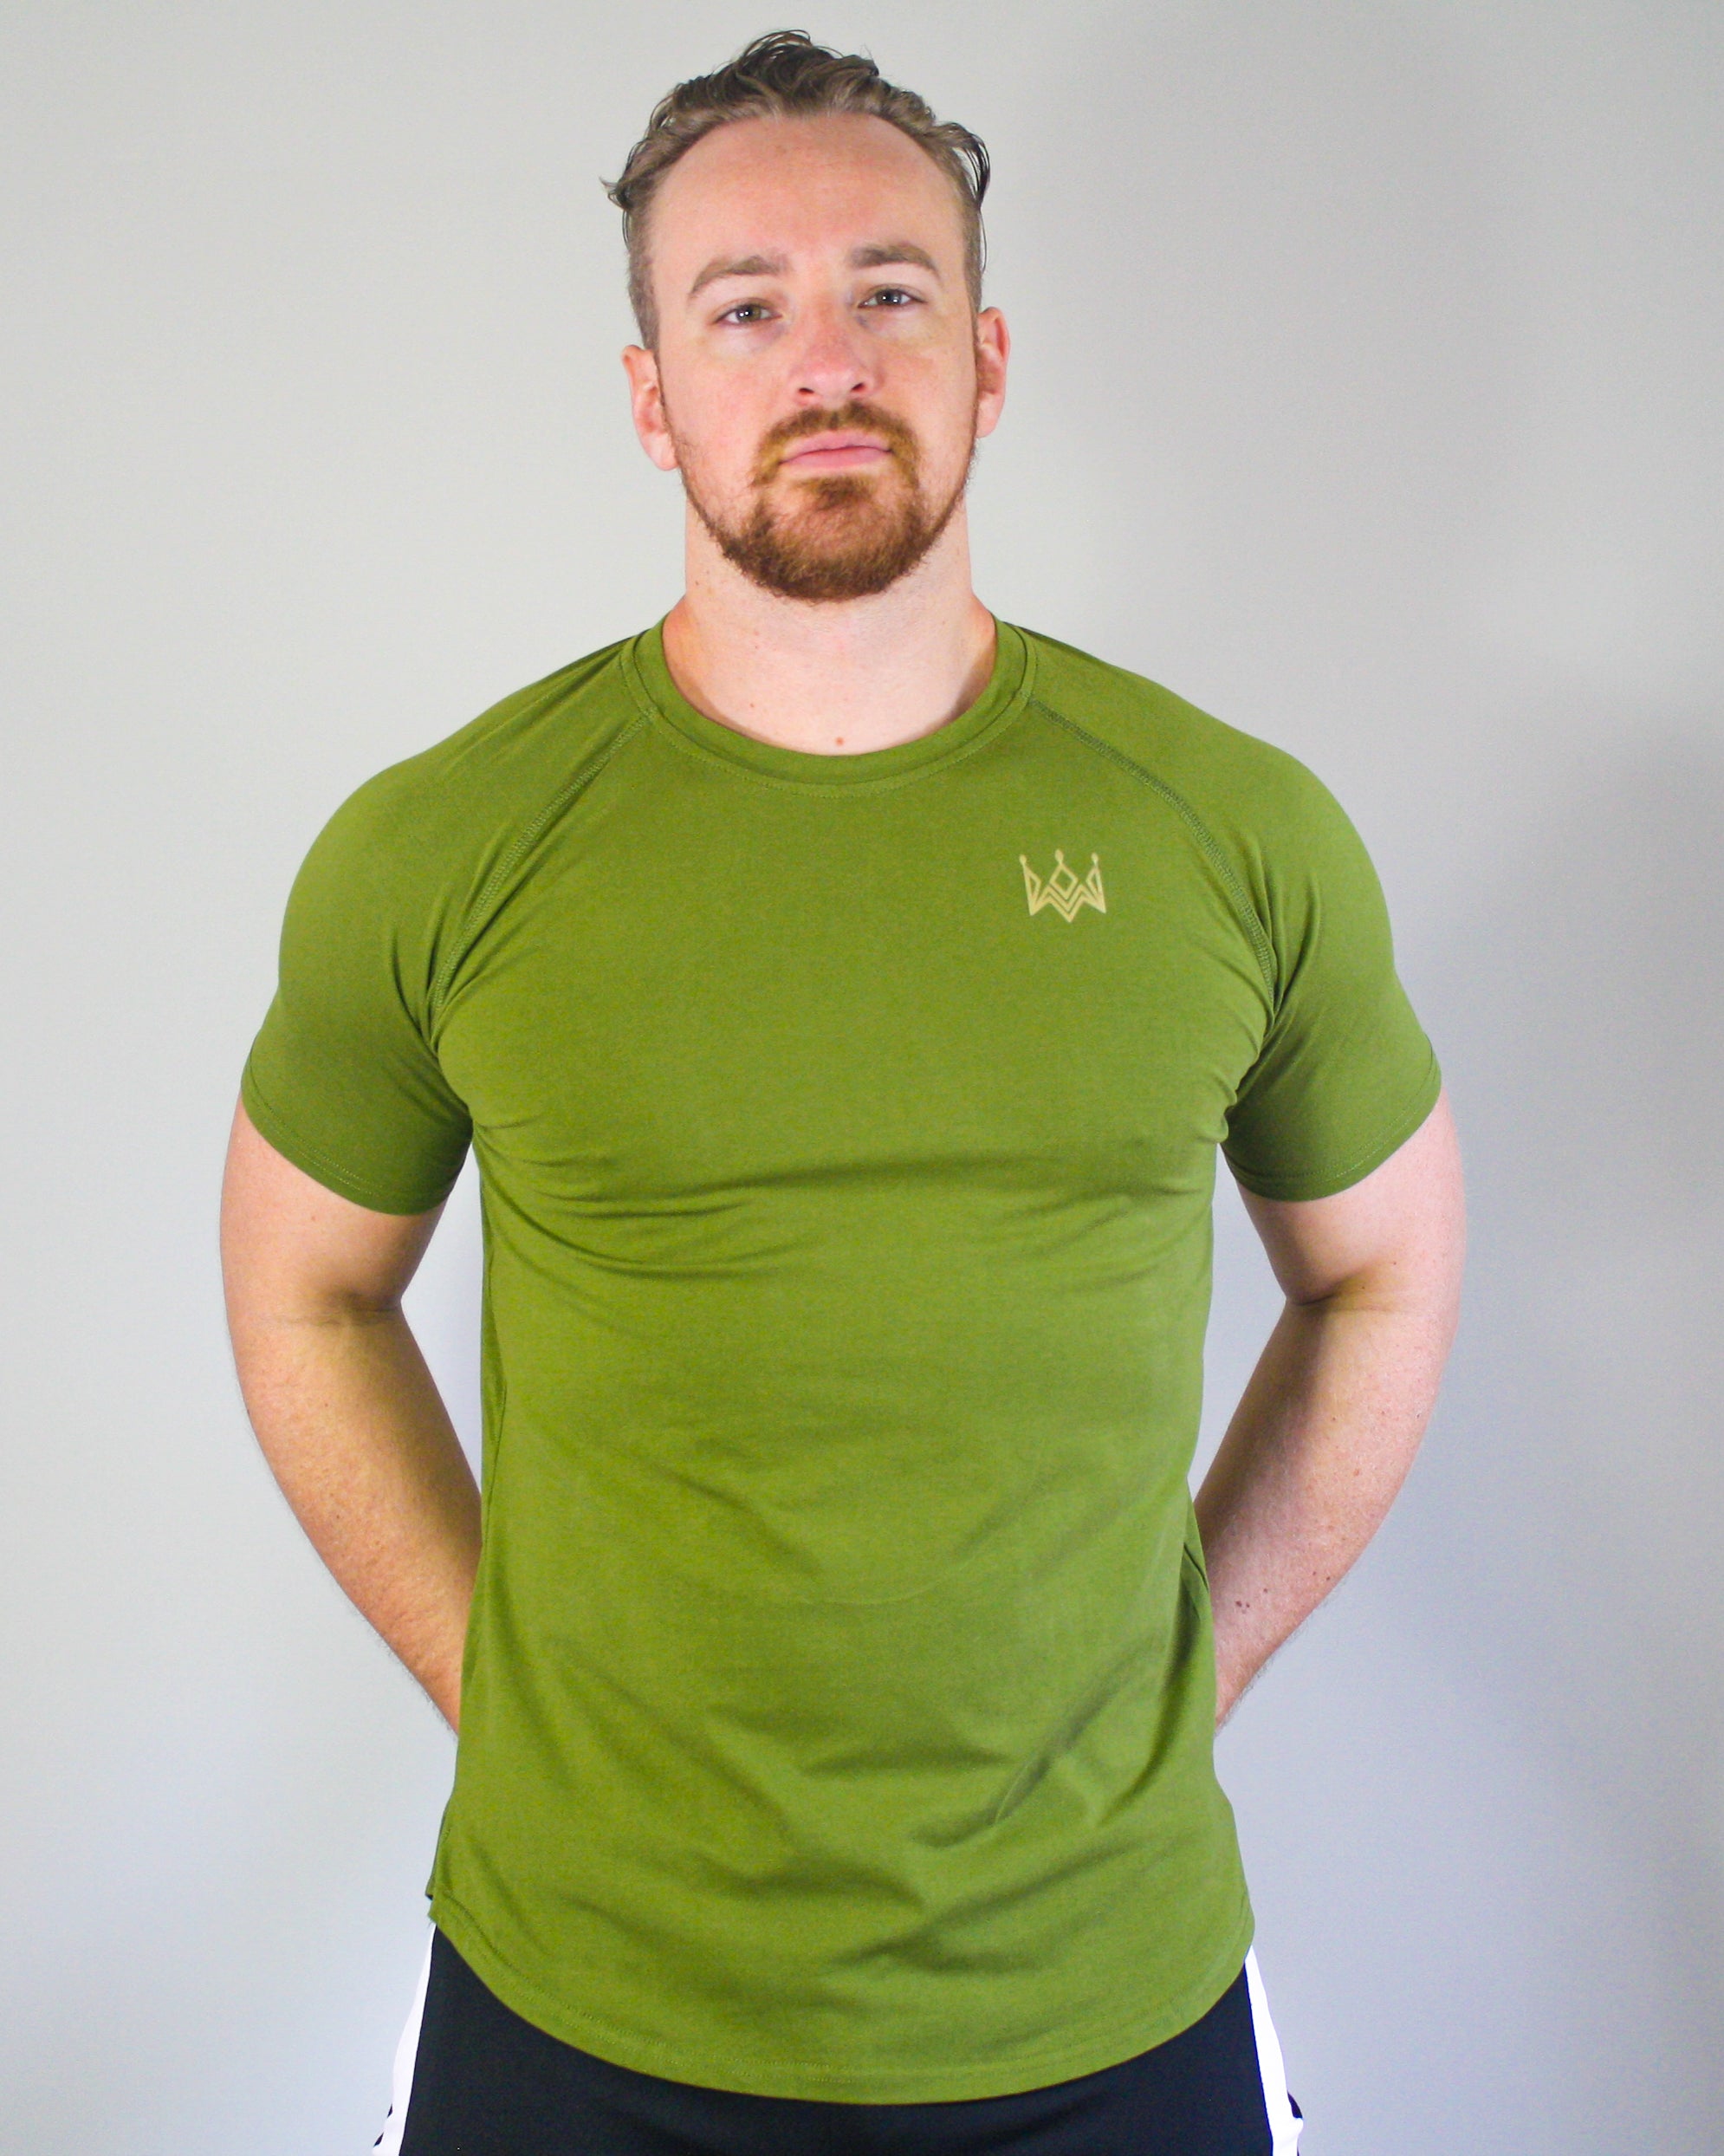 Tunic Performance Shirt - Olive Green